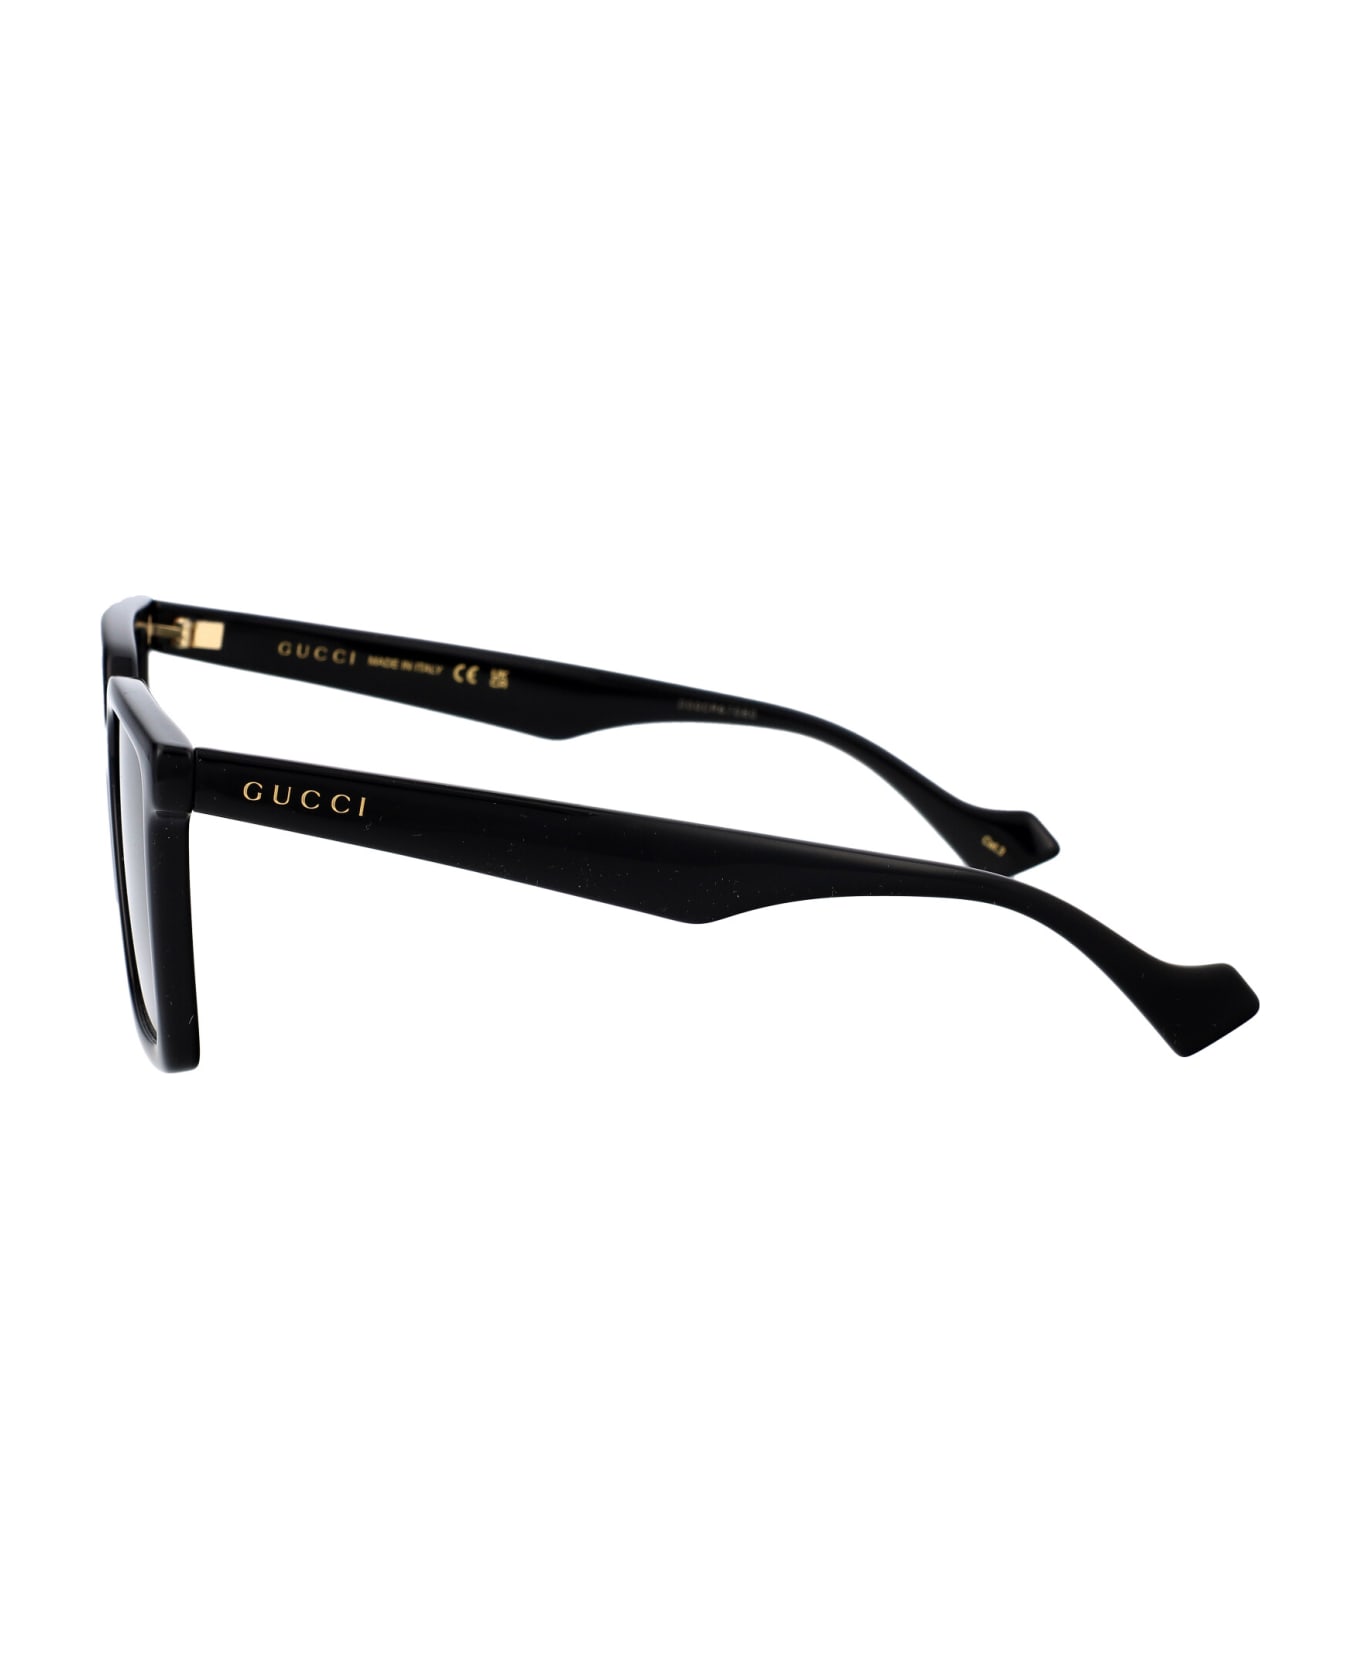 Gucci Eyewear Gg1540s Sunglasses - 001 BLACK BLACK GREY